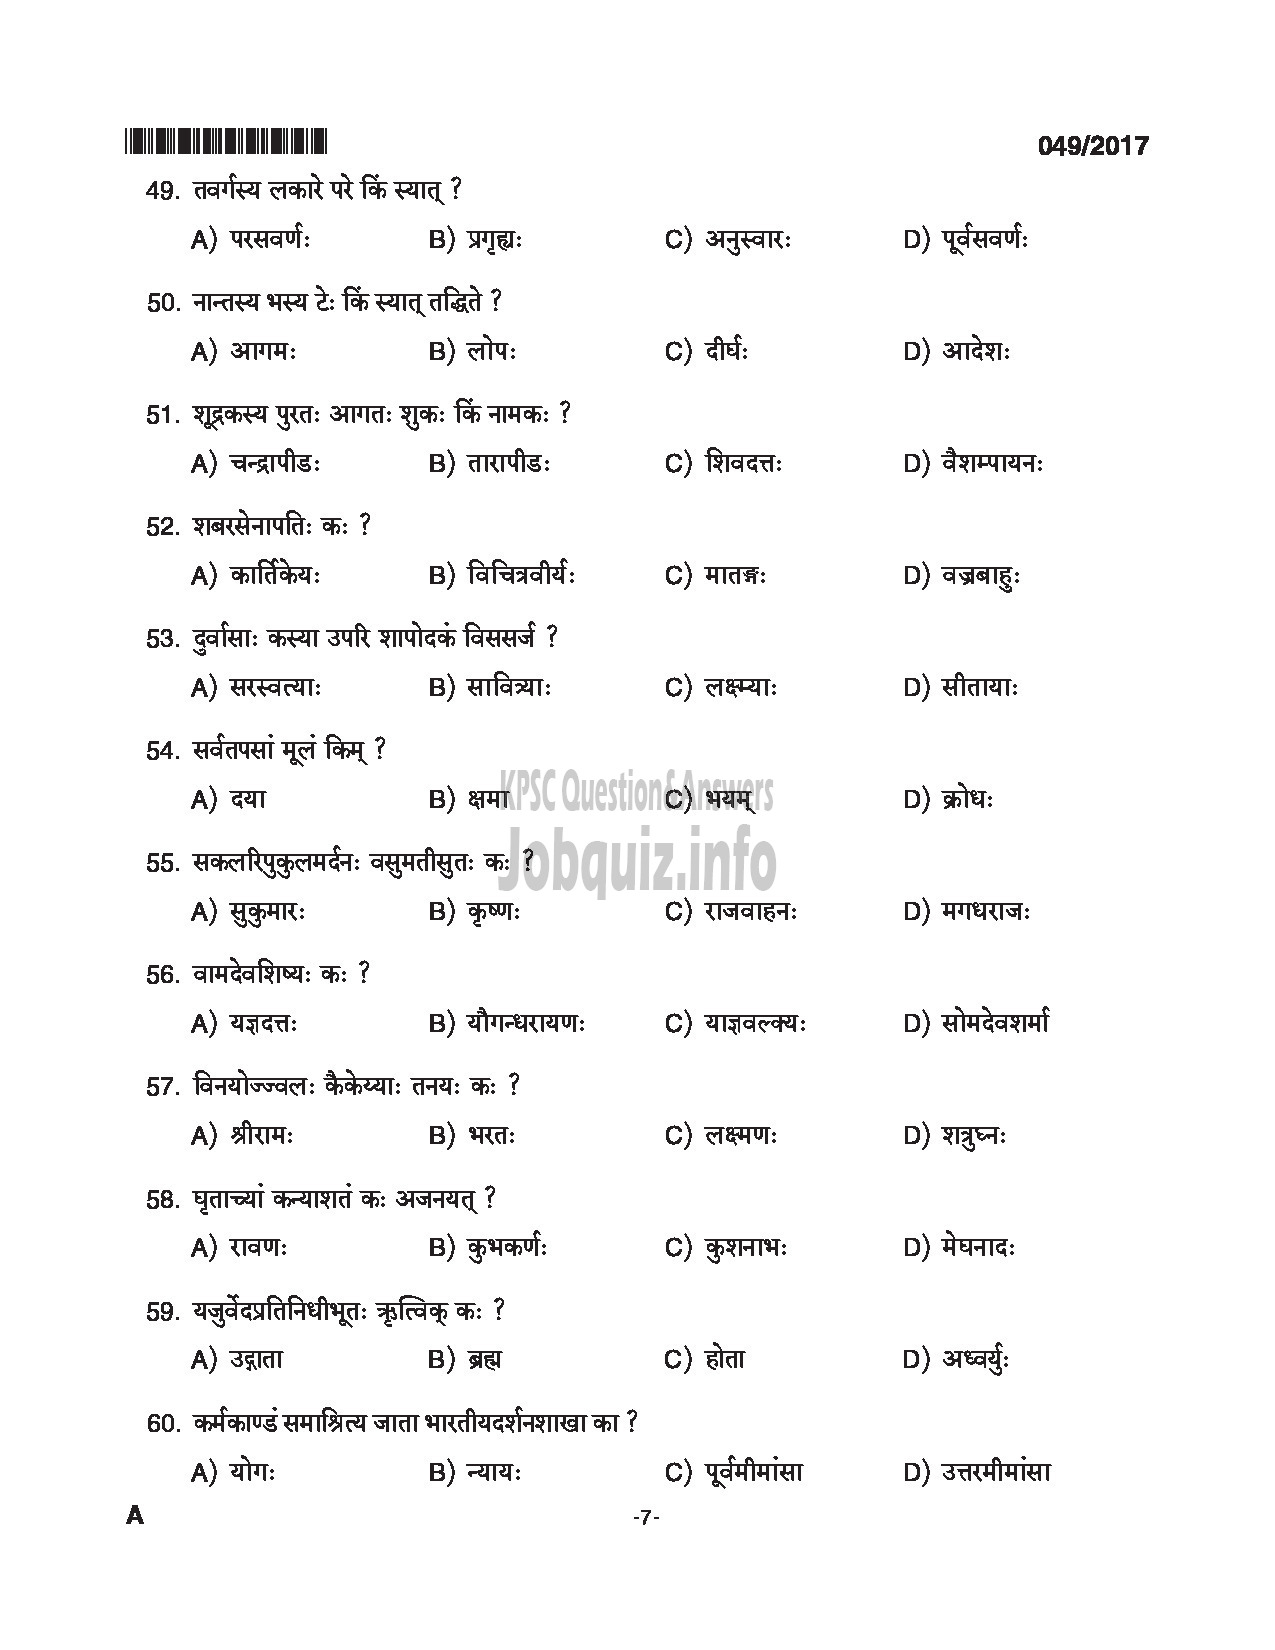 Kerala PSC Question Paper - LECTURER IN SANSKRIT GENERAL COLLEGIATE EDN 133/2015-7